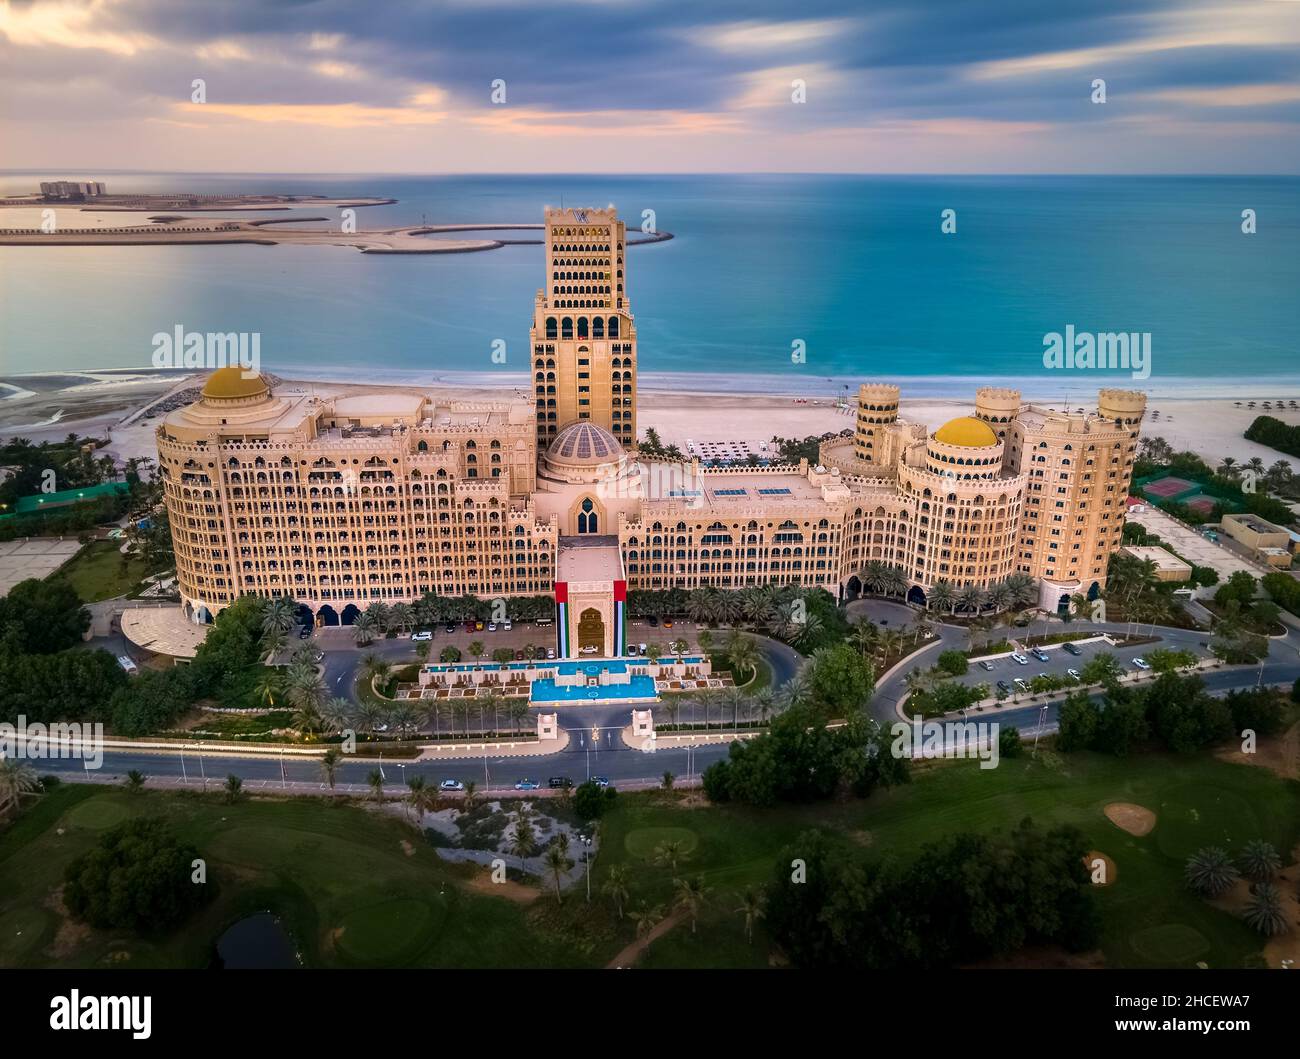 Ras Al Khaimah, United Arab Emirates - December 4, 2021: Waldorf Astoria hotel and resort in Ras al Khaimah near Al Hamra village aerial long exposure Stock Photo